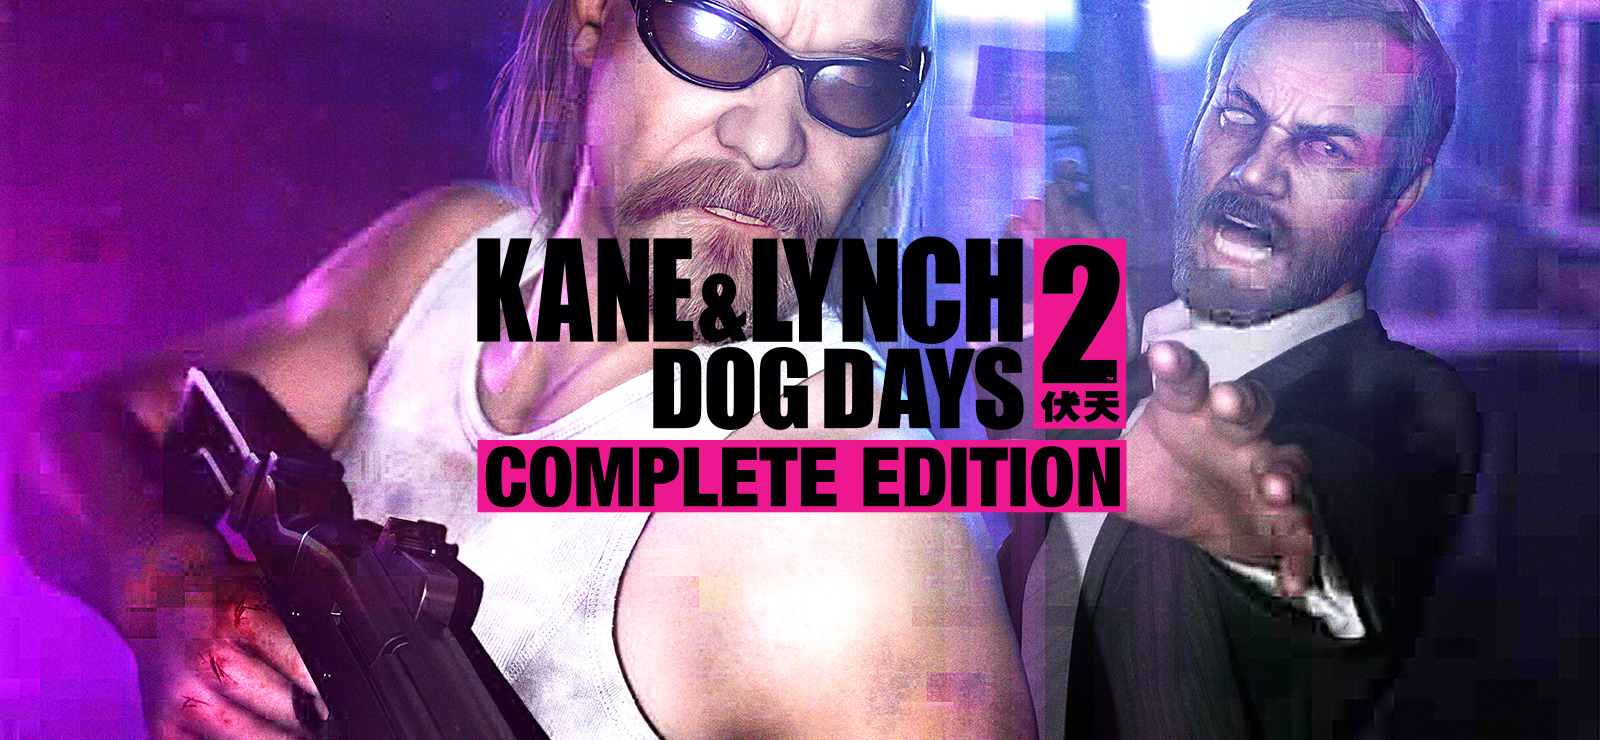 Kane & Lynch 2: Dog Days – Complete Edition